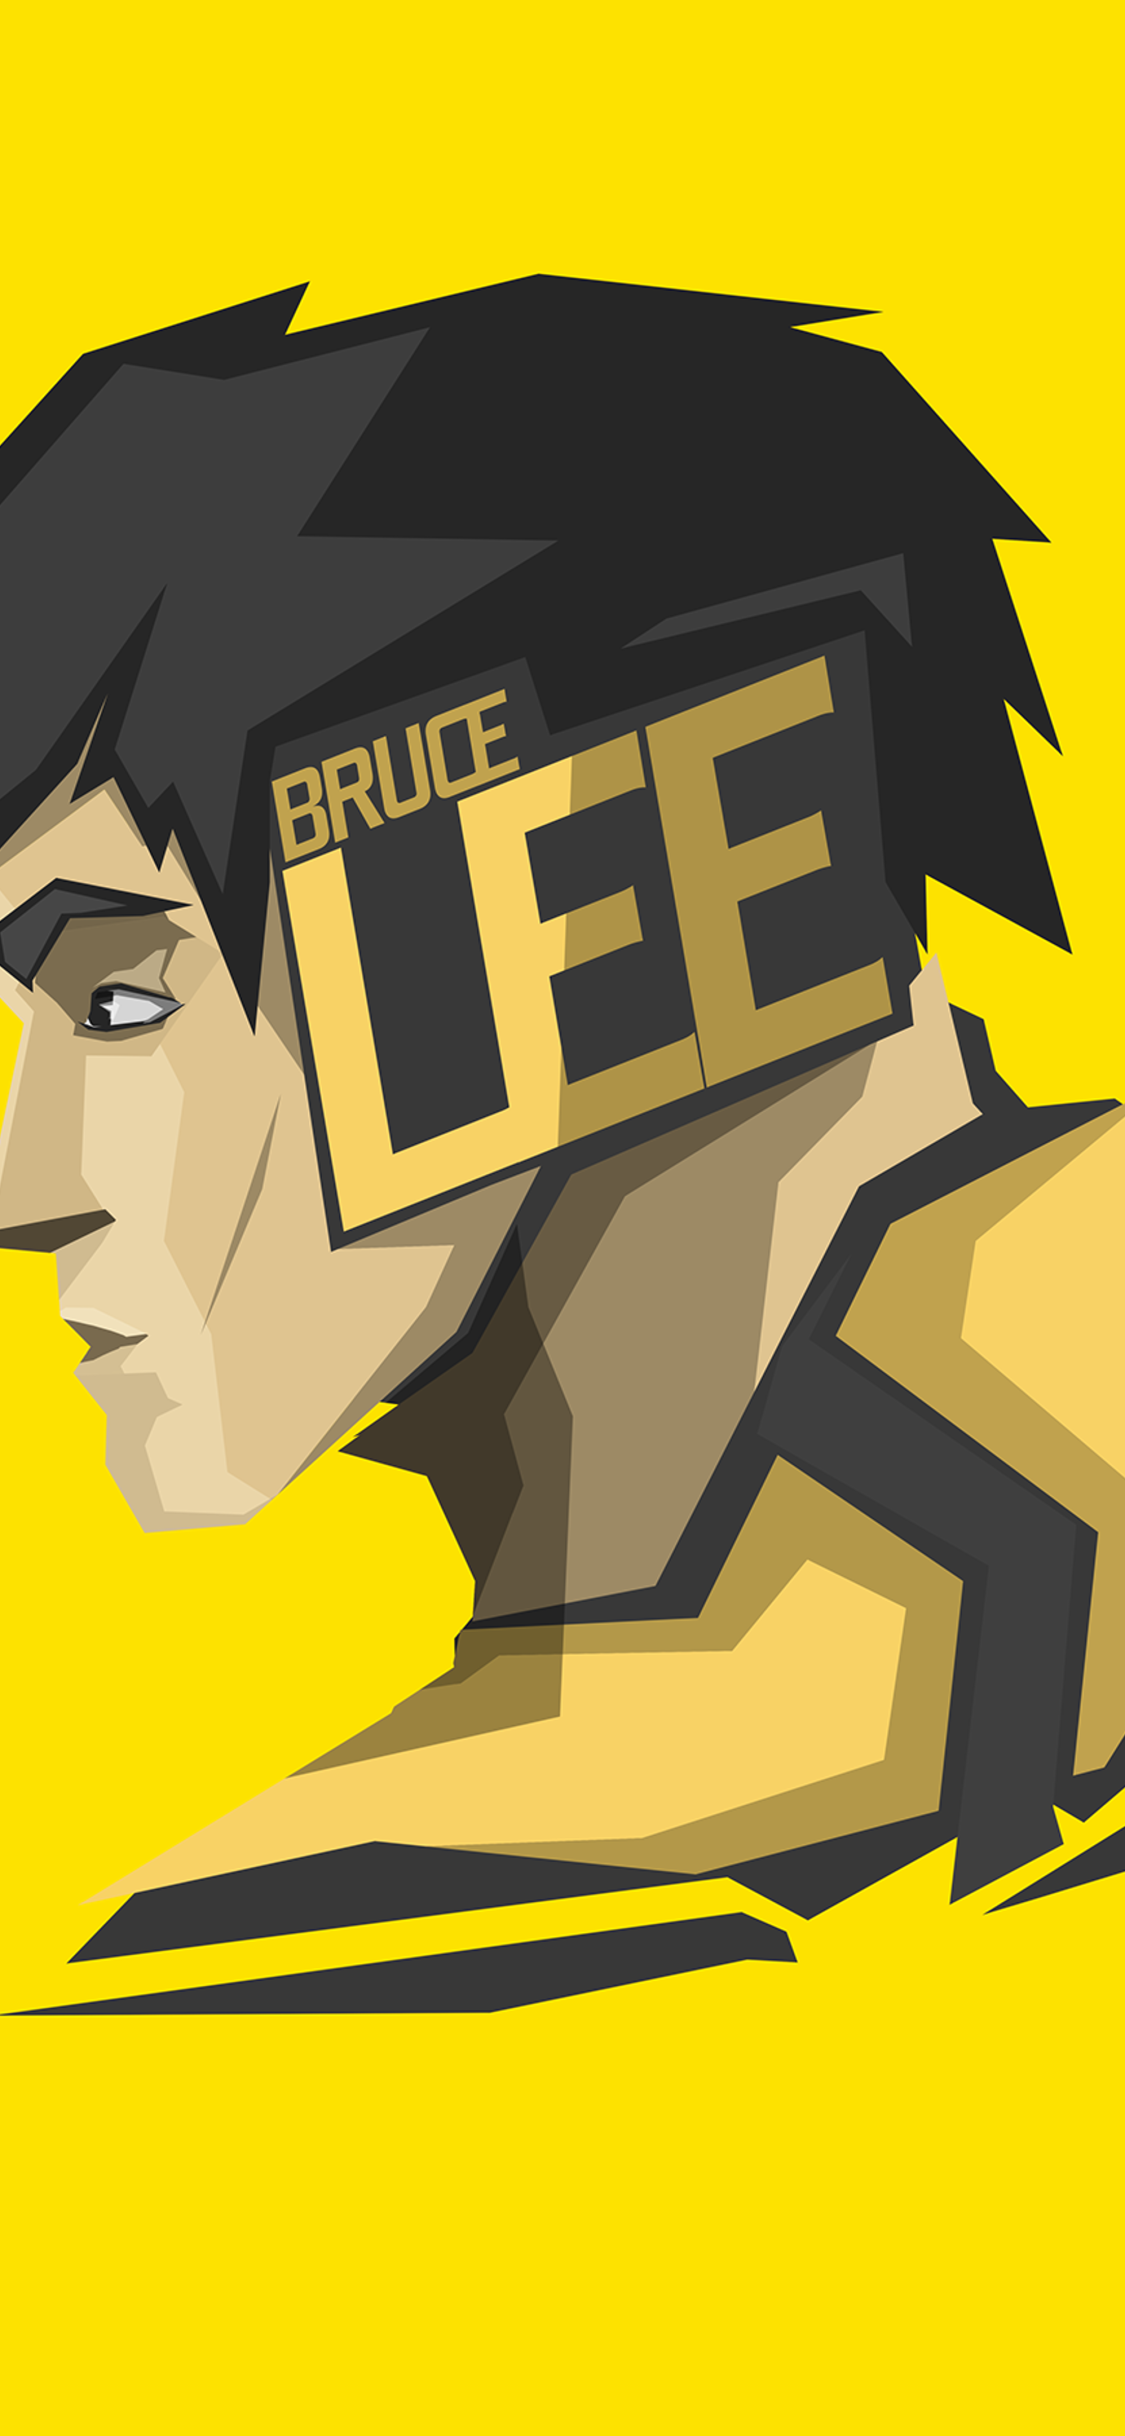 Bruce Lee Phone Wallpaper by BossLogic